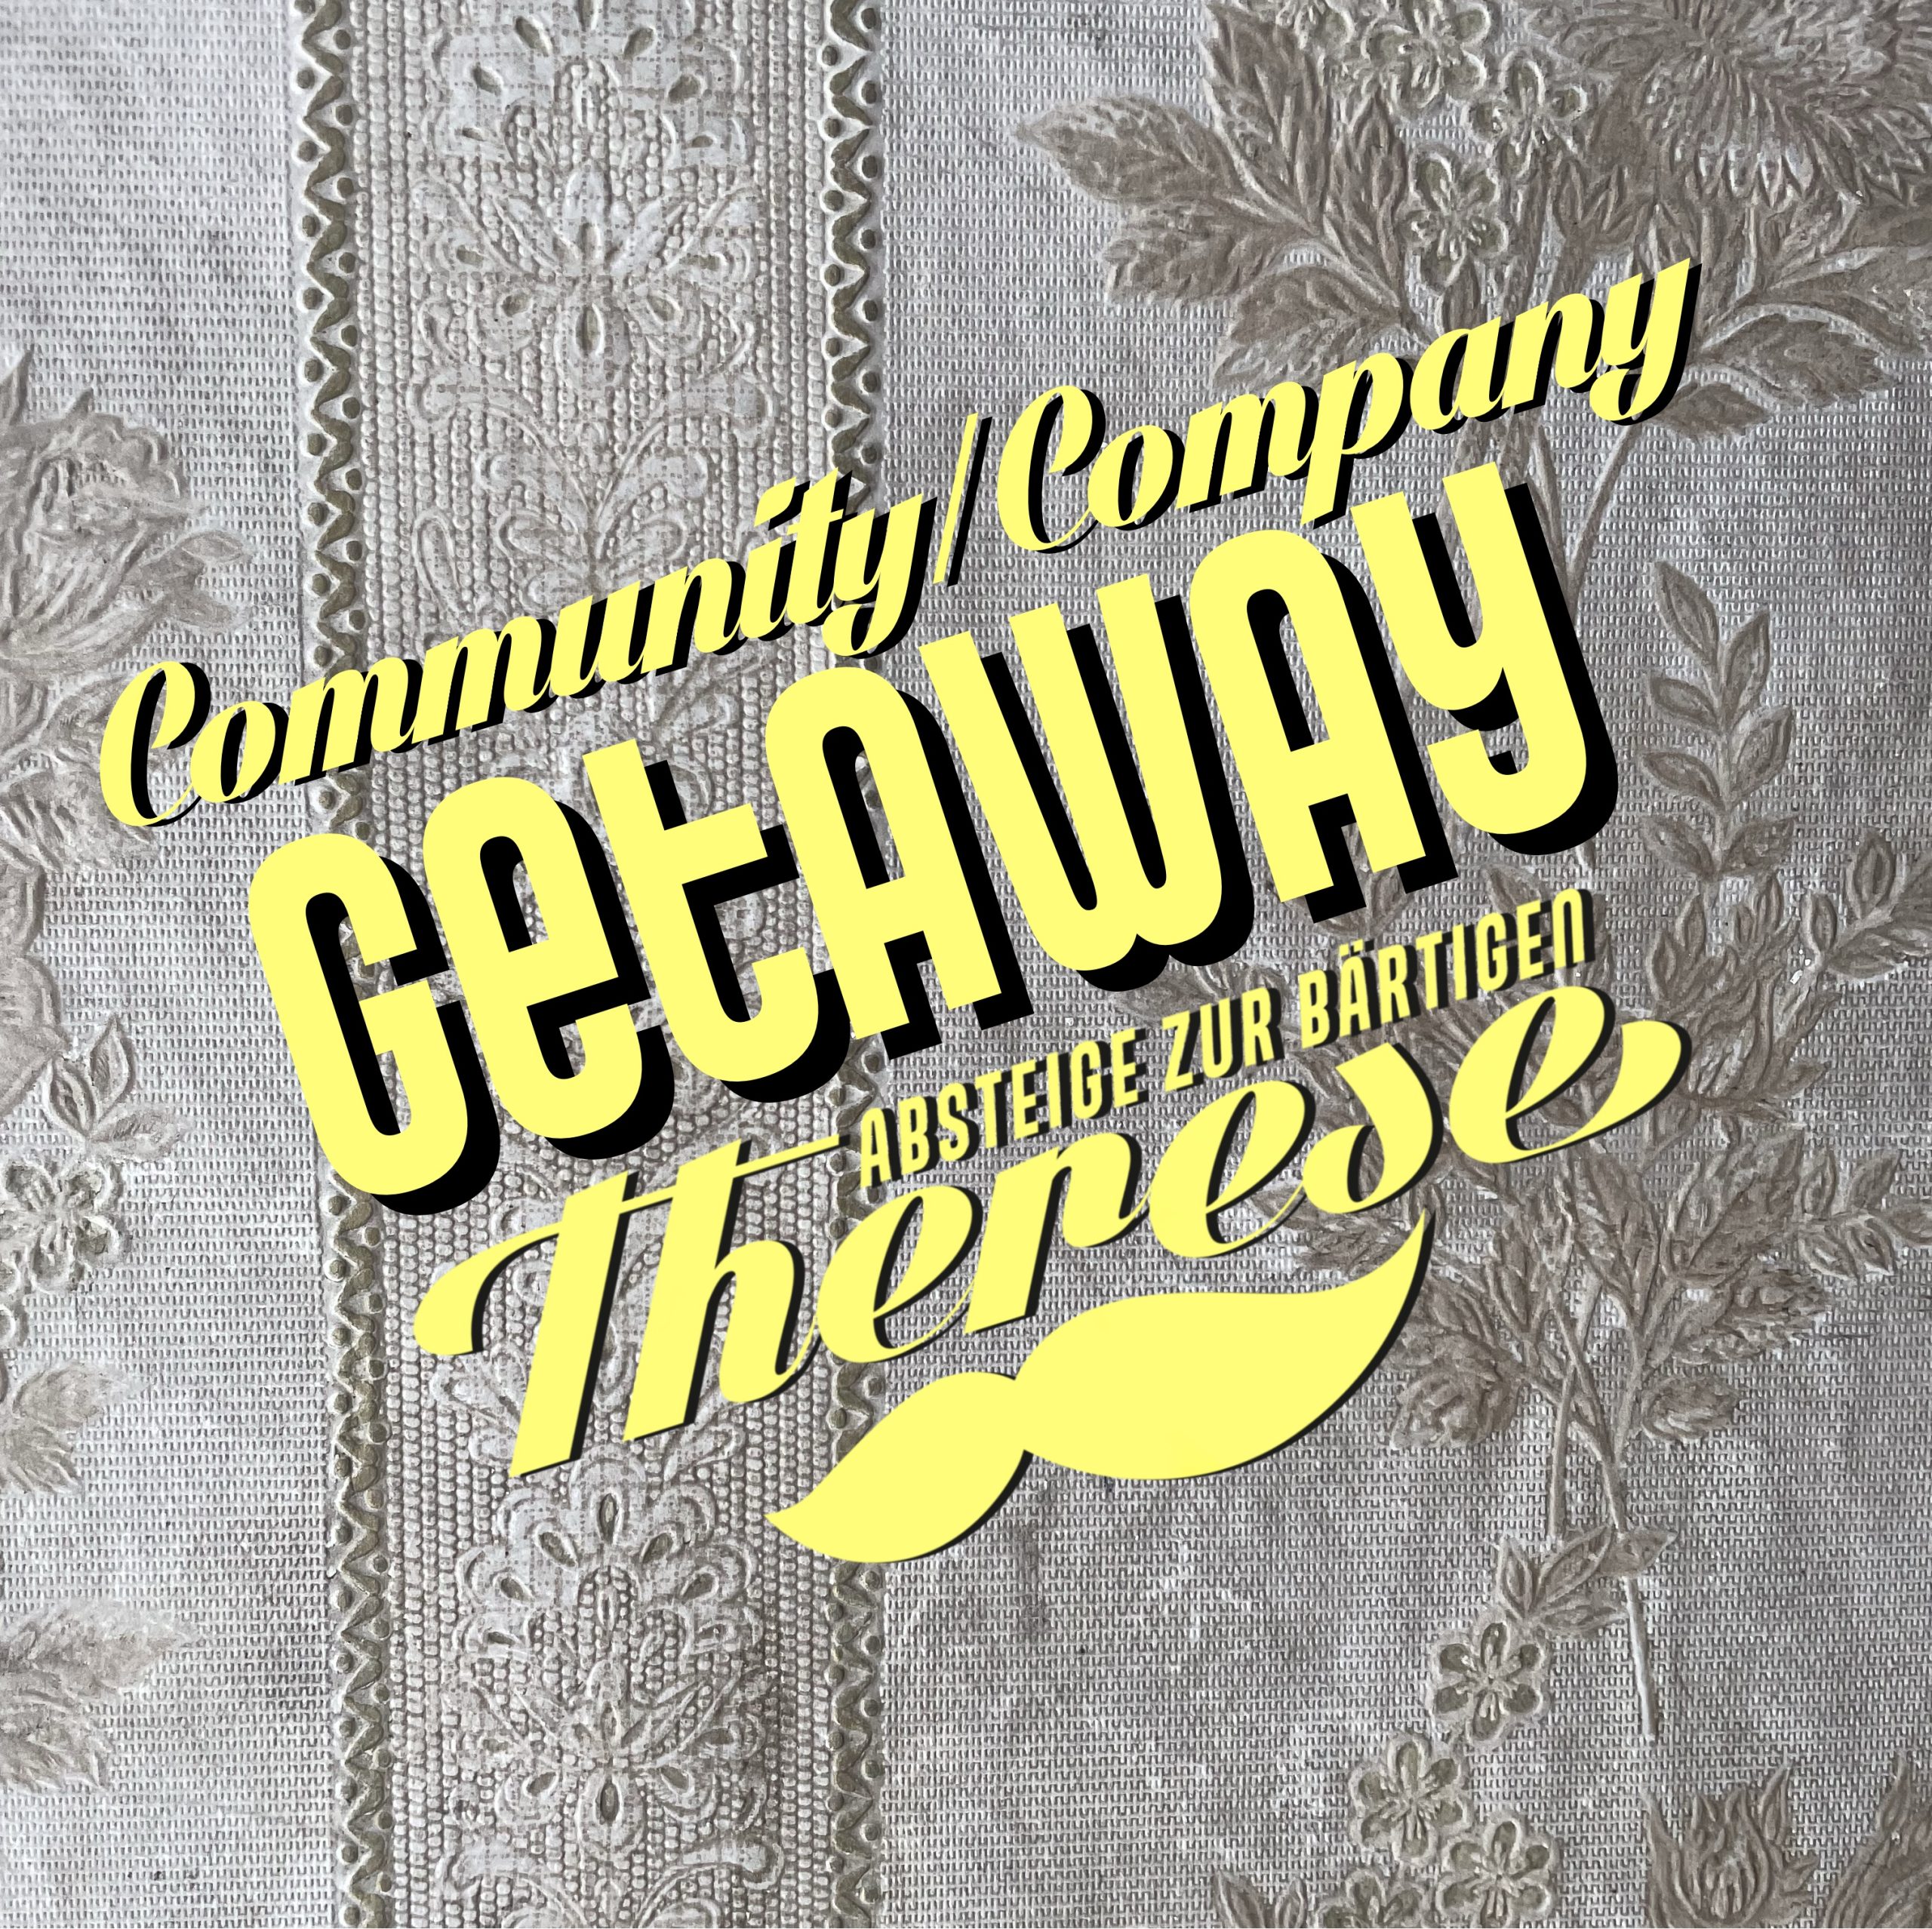 Community Getaway / Company Getaway V